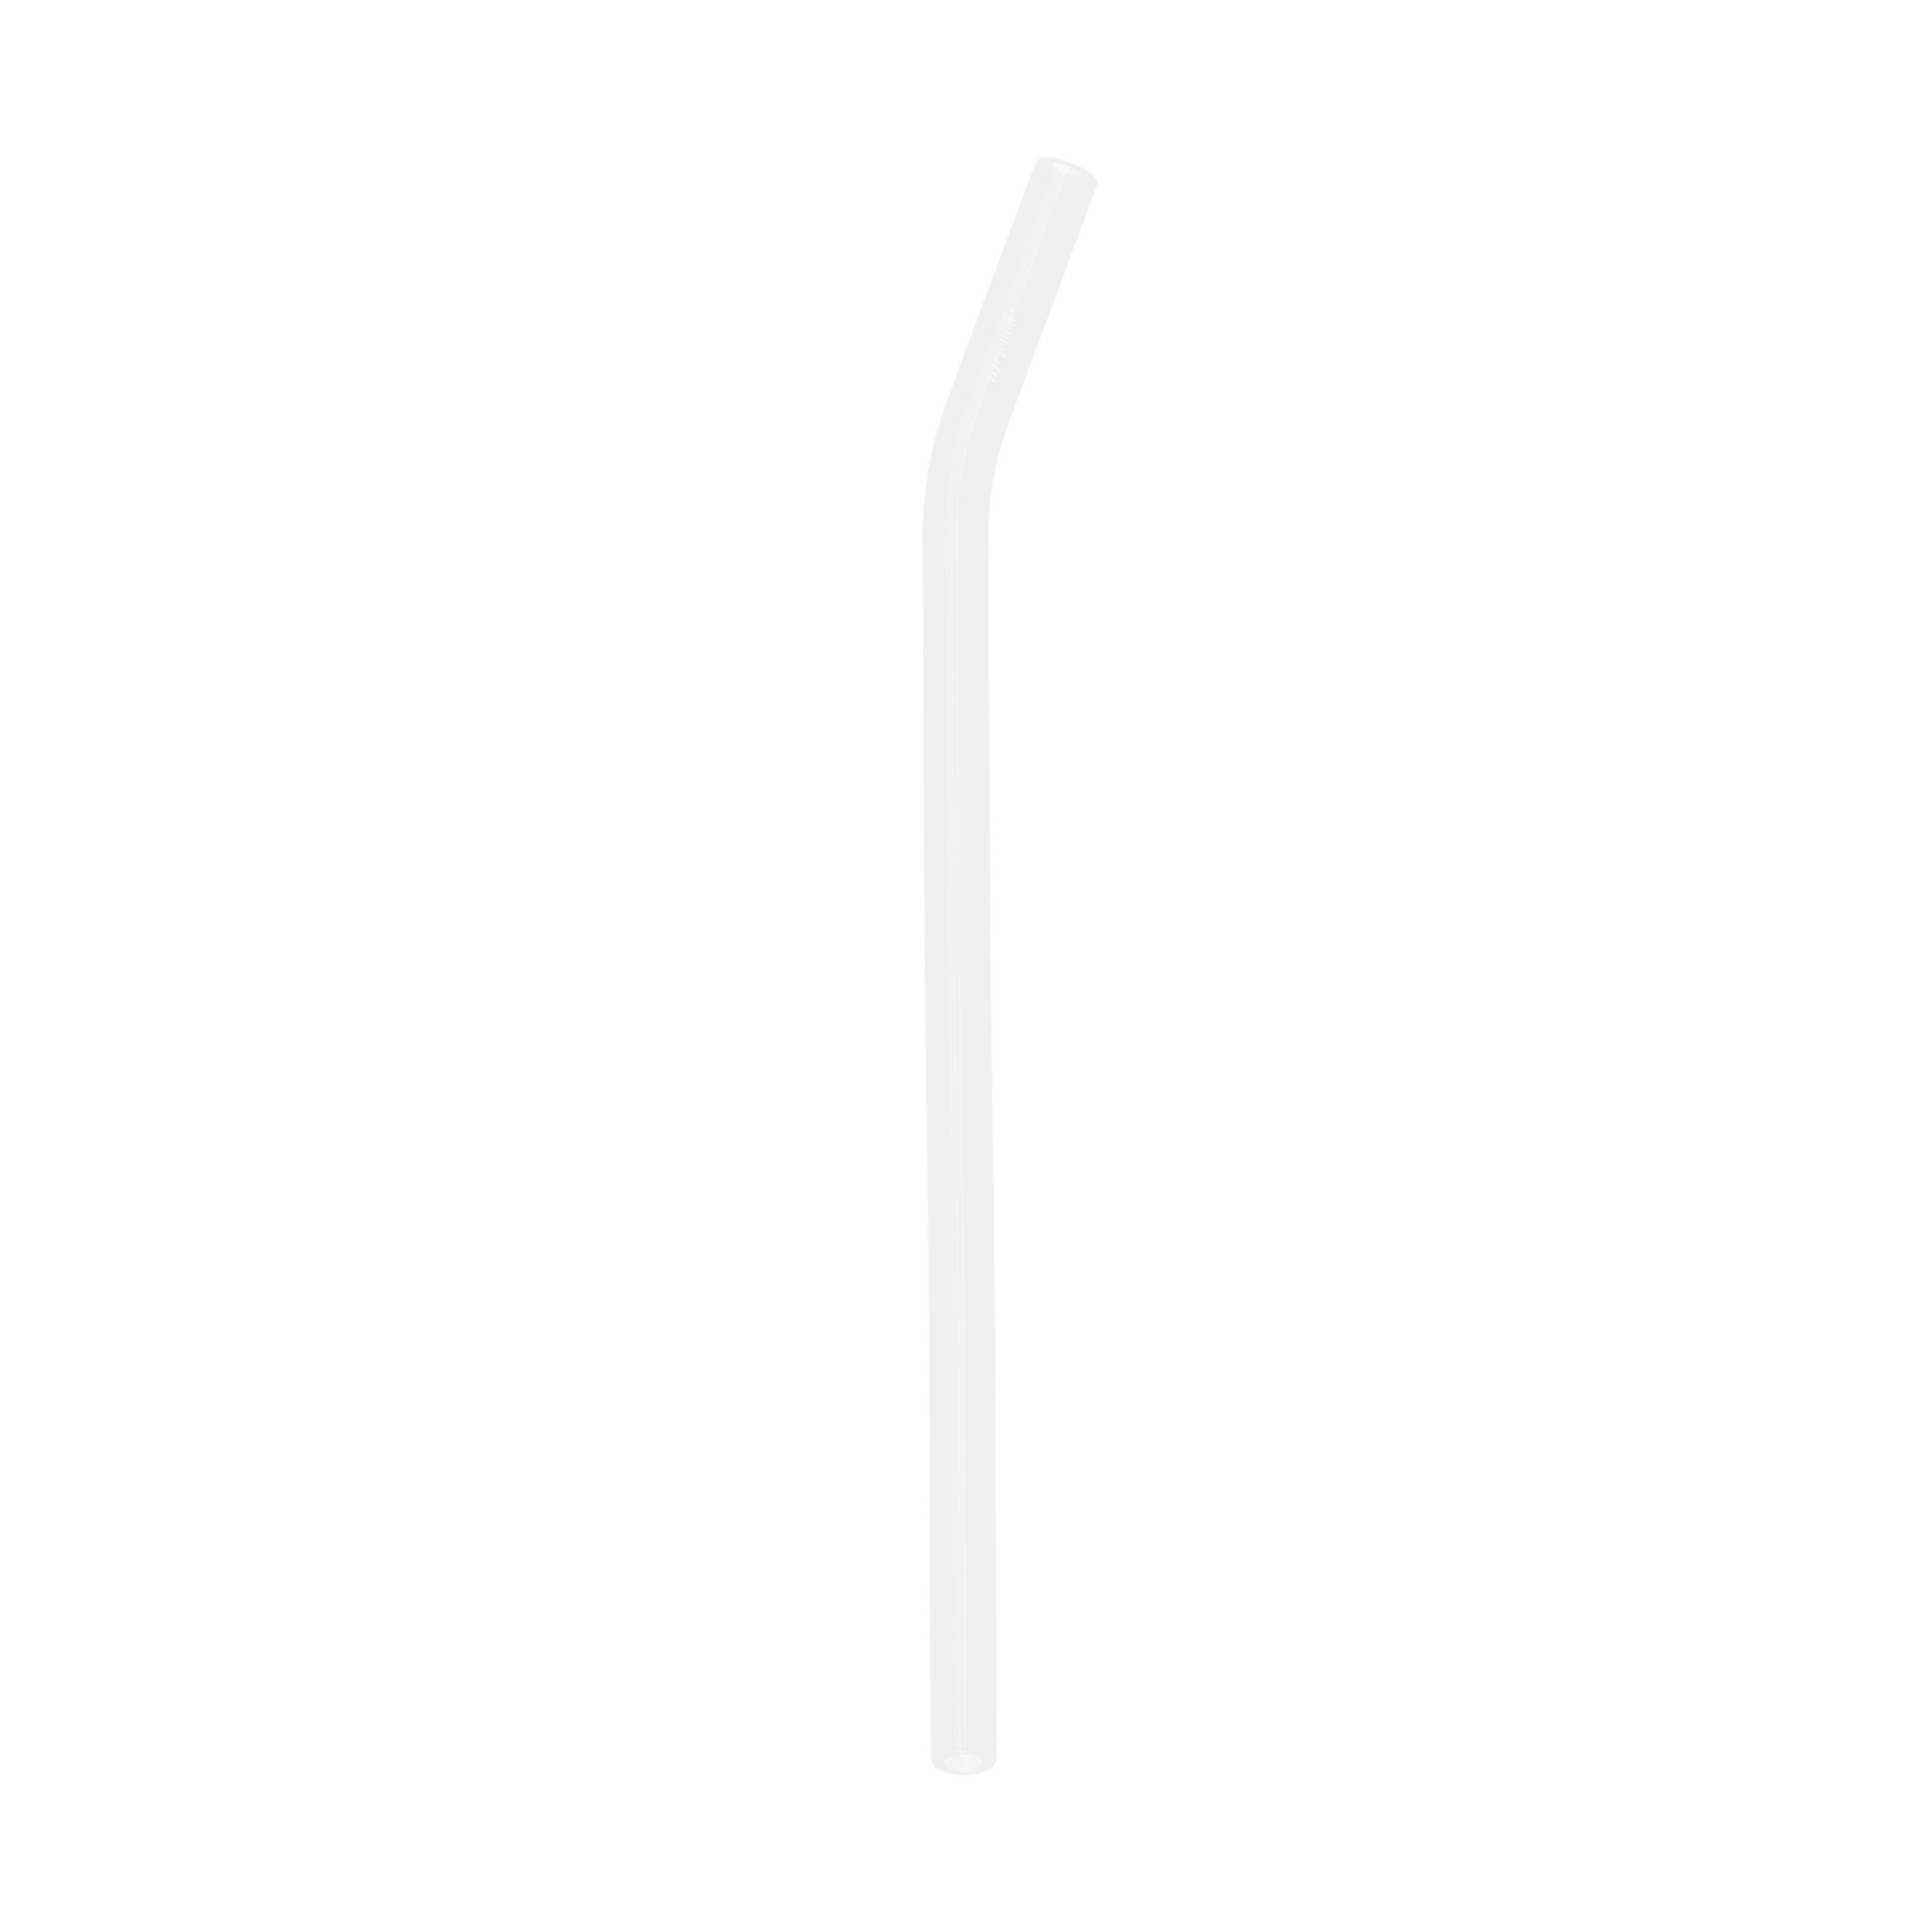 Glass Straws, Mermaid Straw, Reusable Straw, white glass curved single